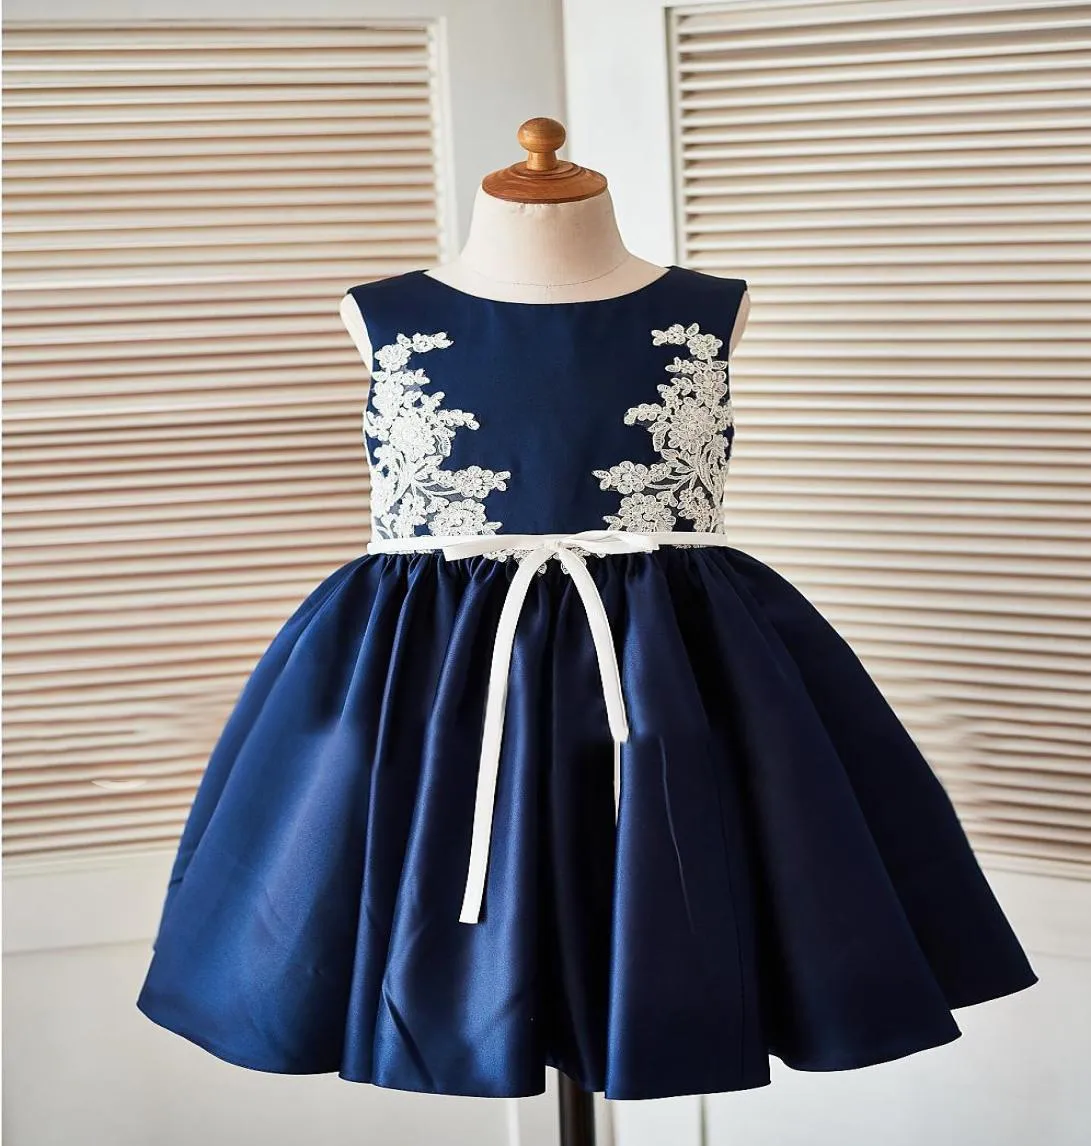 Lovely Navy Blue Satin Applique TeaLength Girl039s Pageant Dresses Flower Girl Dresses Princess Party Dresses Custom Made 2145653210